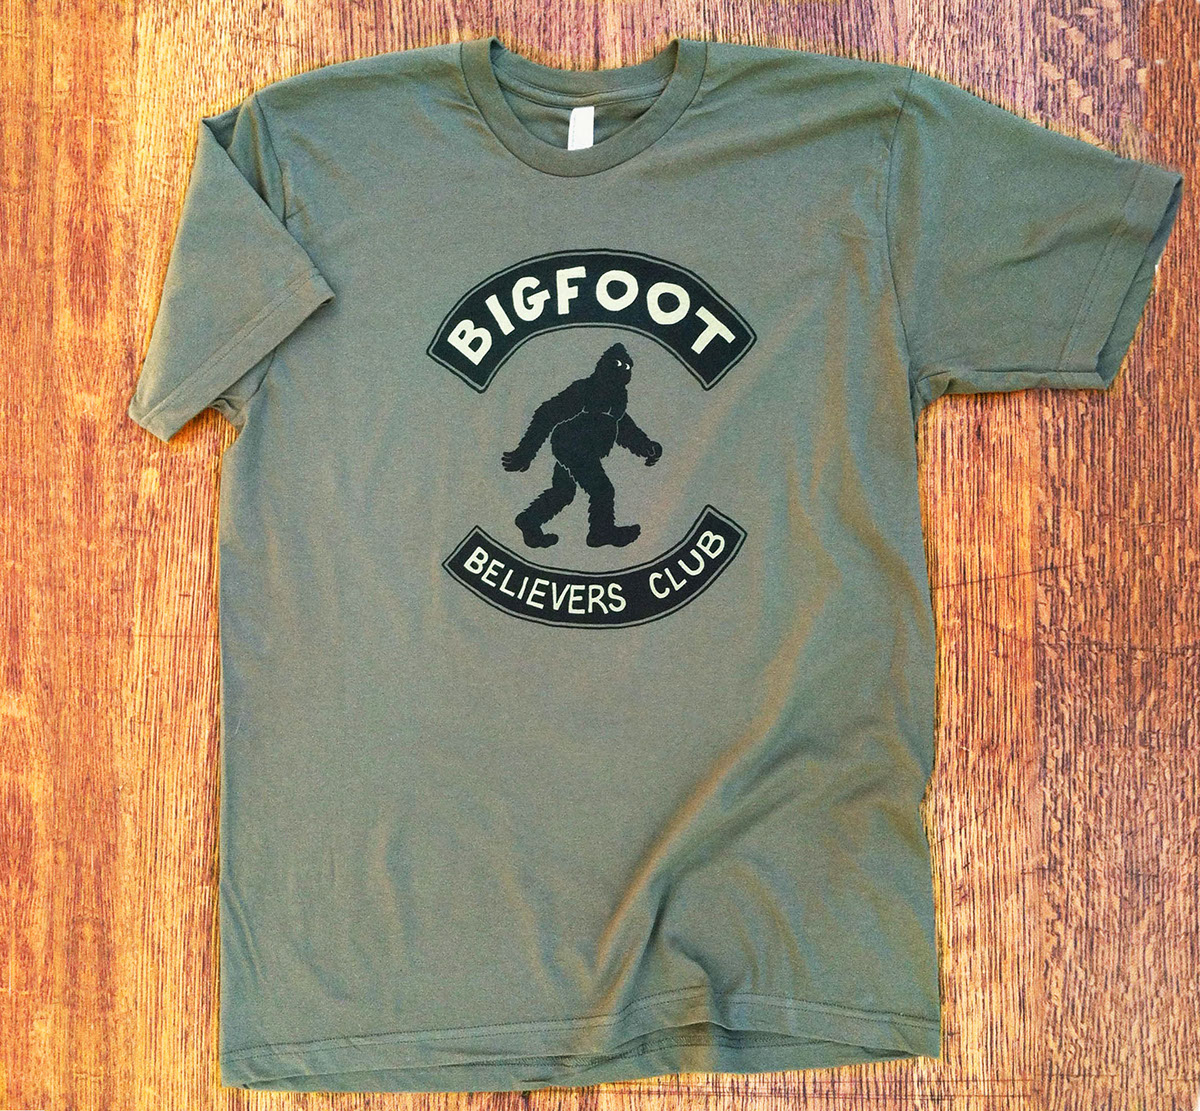 Bigfoot Believers Club t-shirt Screenprinting